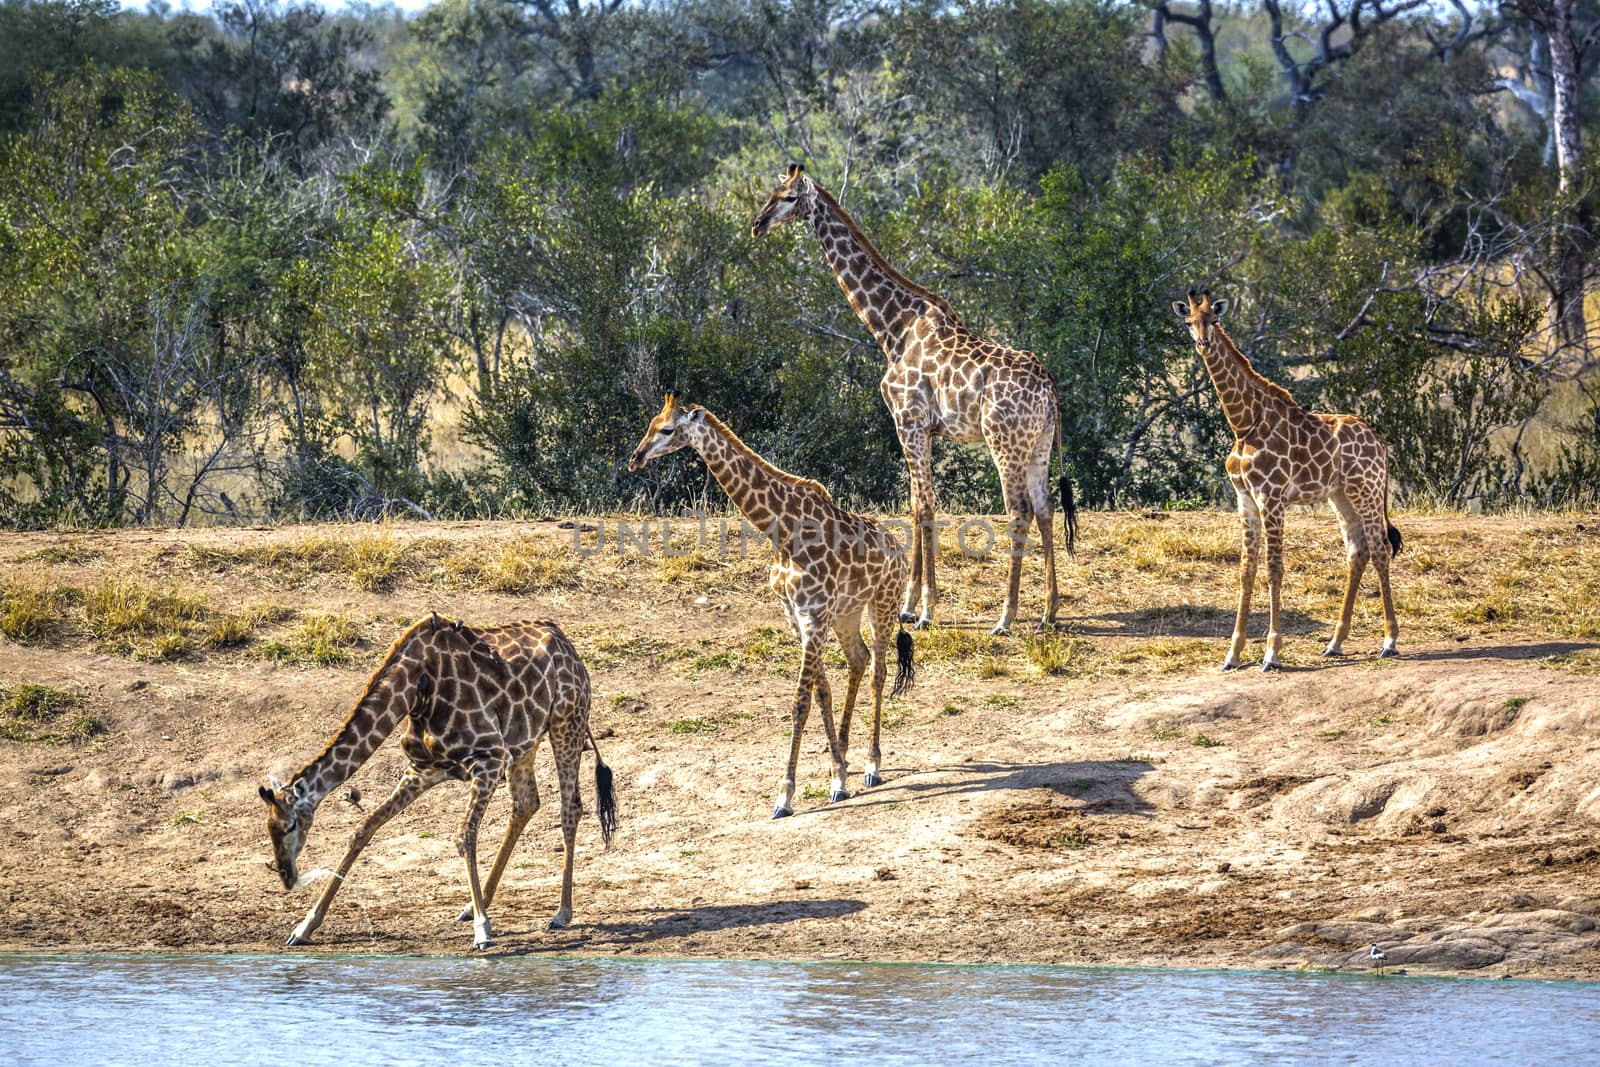 Group of Giraffes on lake side in Kruger National park, South Africa ; Specie Giraffa camelopardalis family of Giraffidae